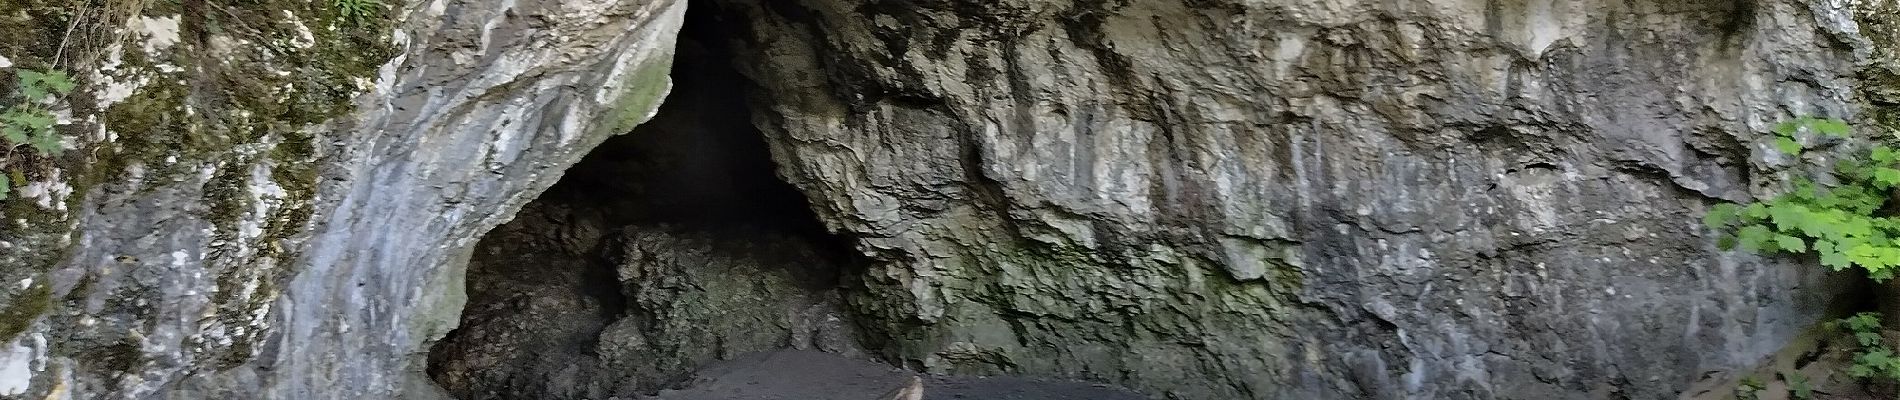 Excursión A pie Csobánka - Mackó-barlang ösvény (Csobánka, Oszoly-pihenő - Mackó-barlang - Csobánka, Oszoly-pihenő) - Photo